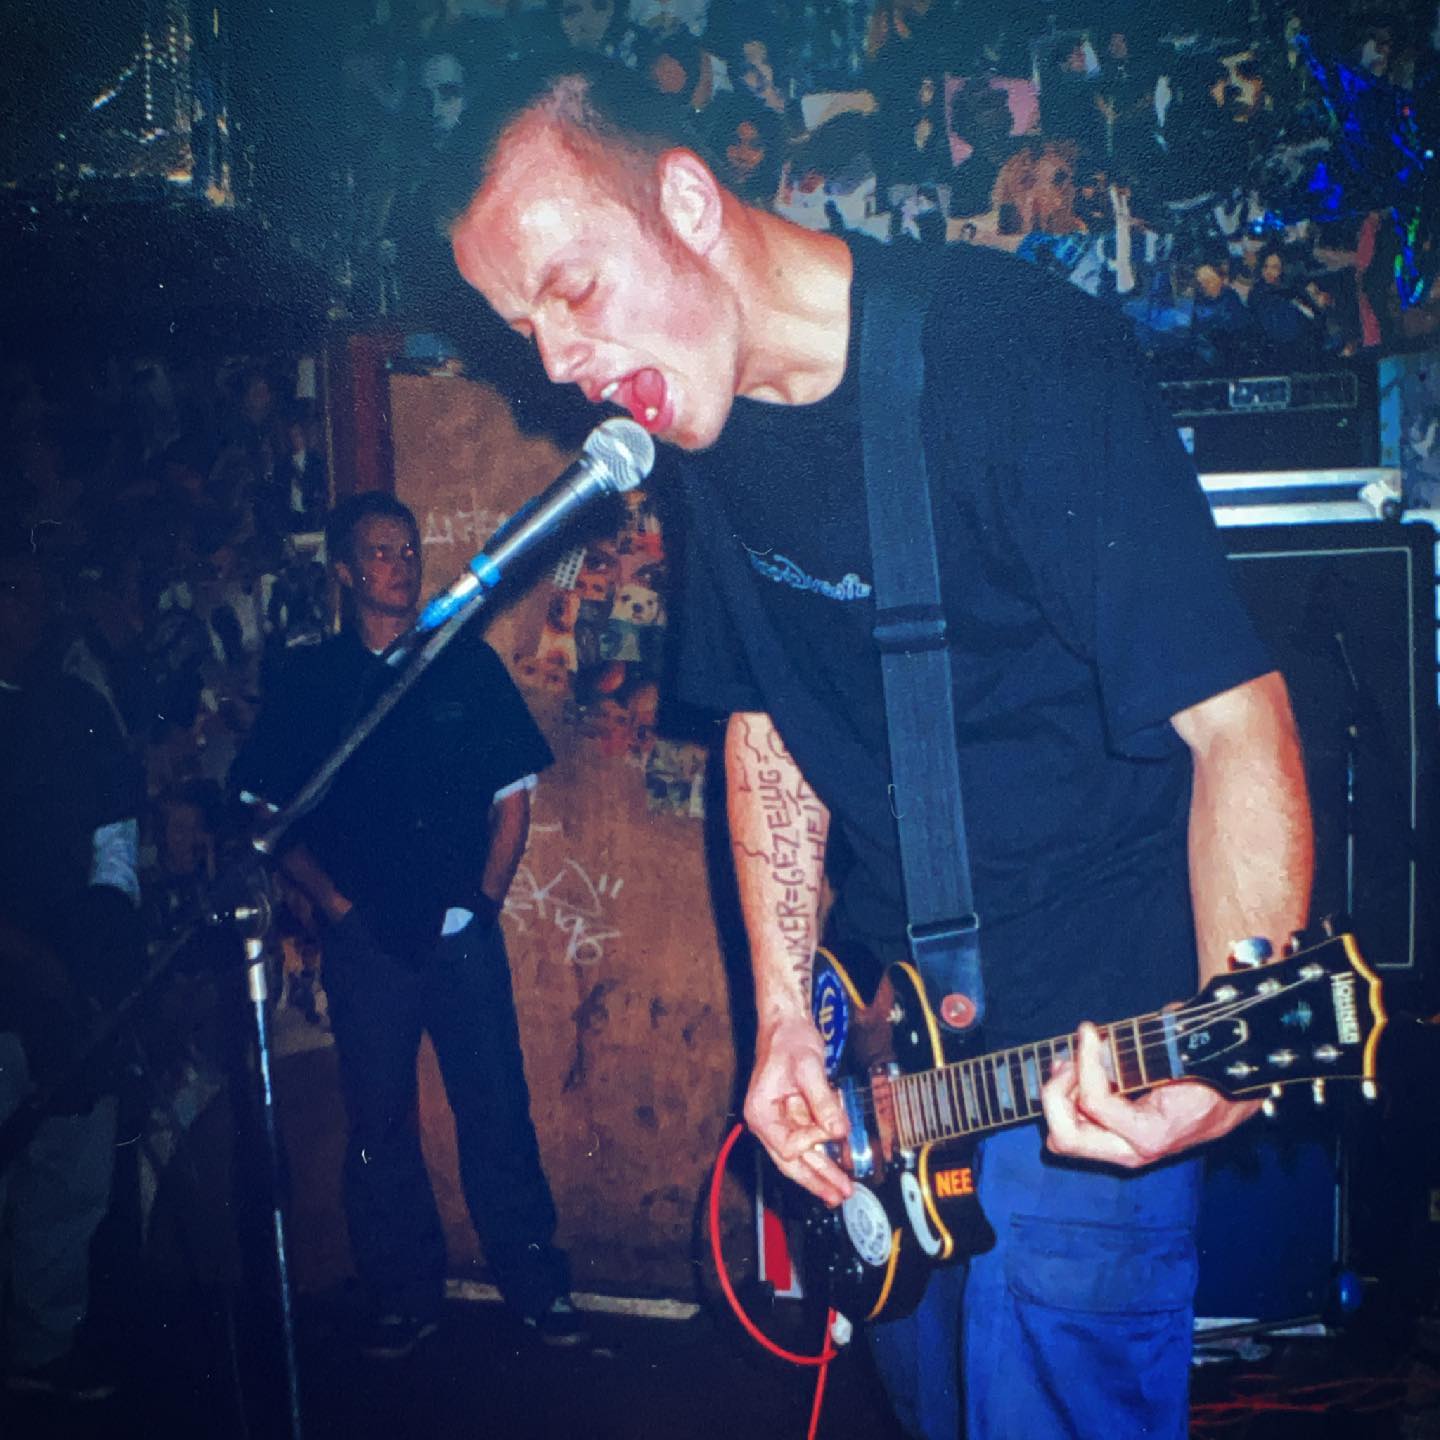 Profile - Eureka, Zwolle (NL) - 2 October 1998 #straightedge #vegan #hardcore #punkrock #metal #gigpic by @twentylandcrew